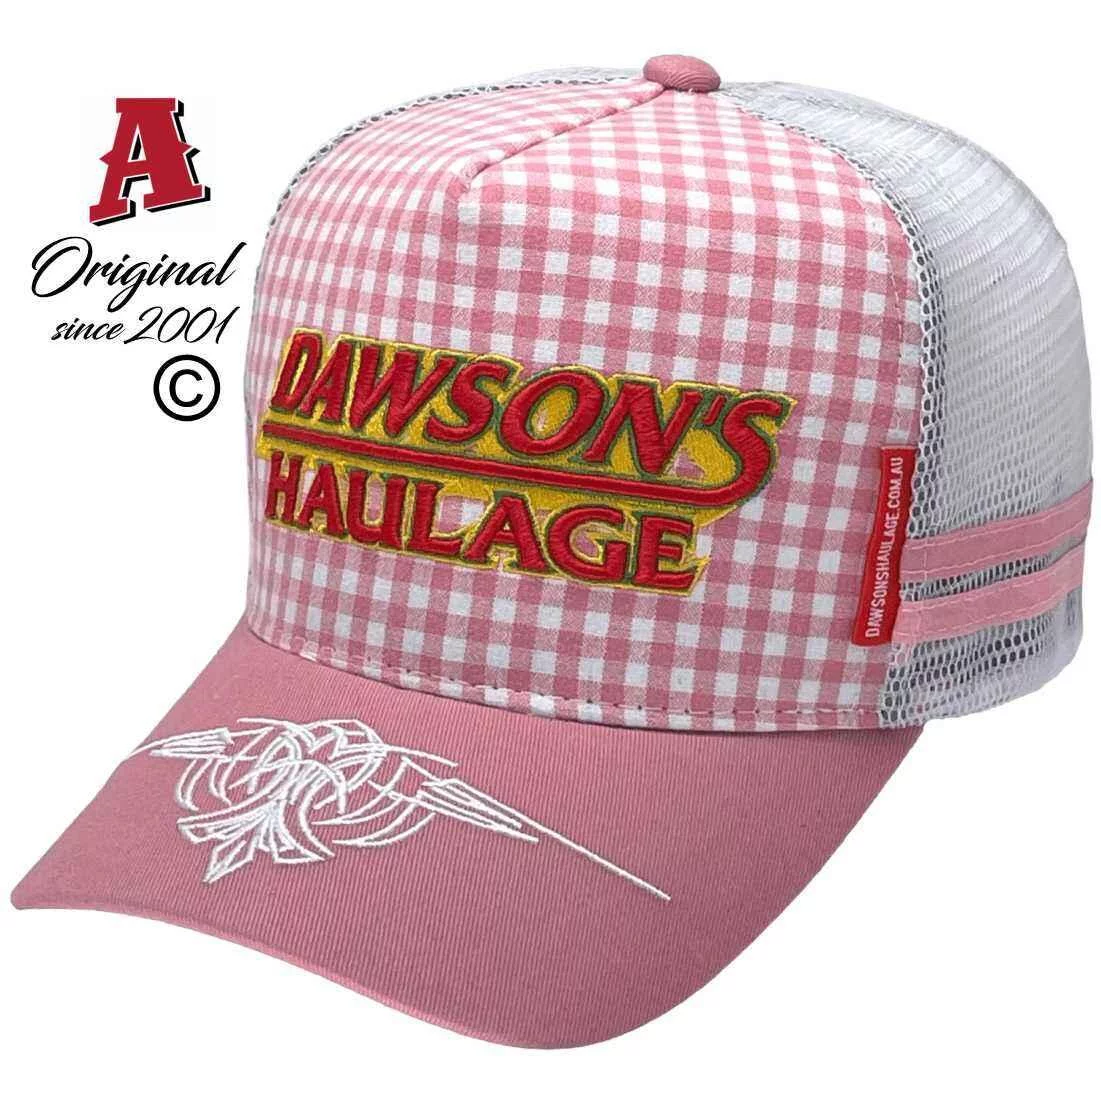 Dawsons Haulage BARANDUDA VIC HP Power Aussie Trucker Hats with Double SideBands and Australian HeadFit Crown Pink Gingham White